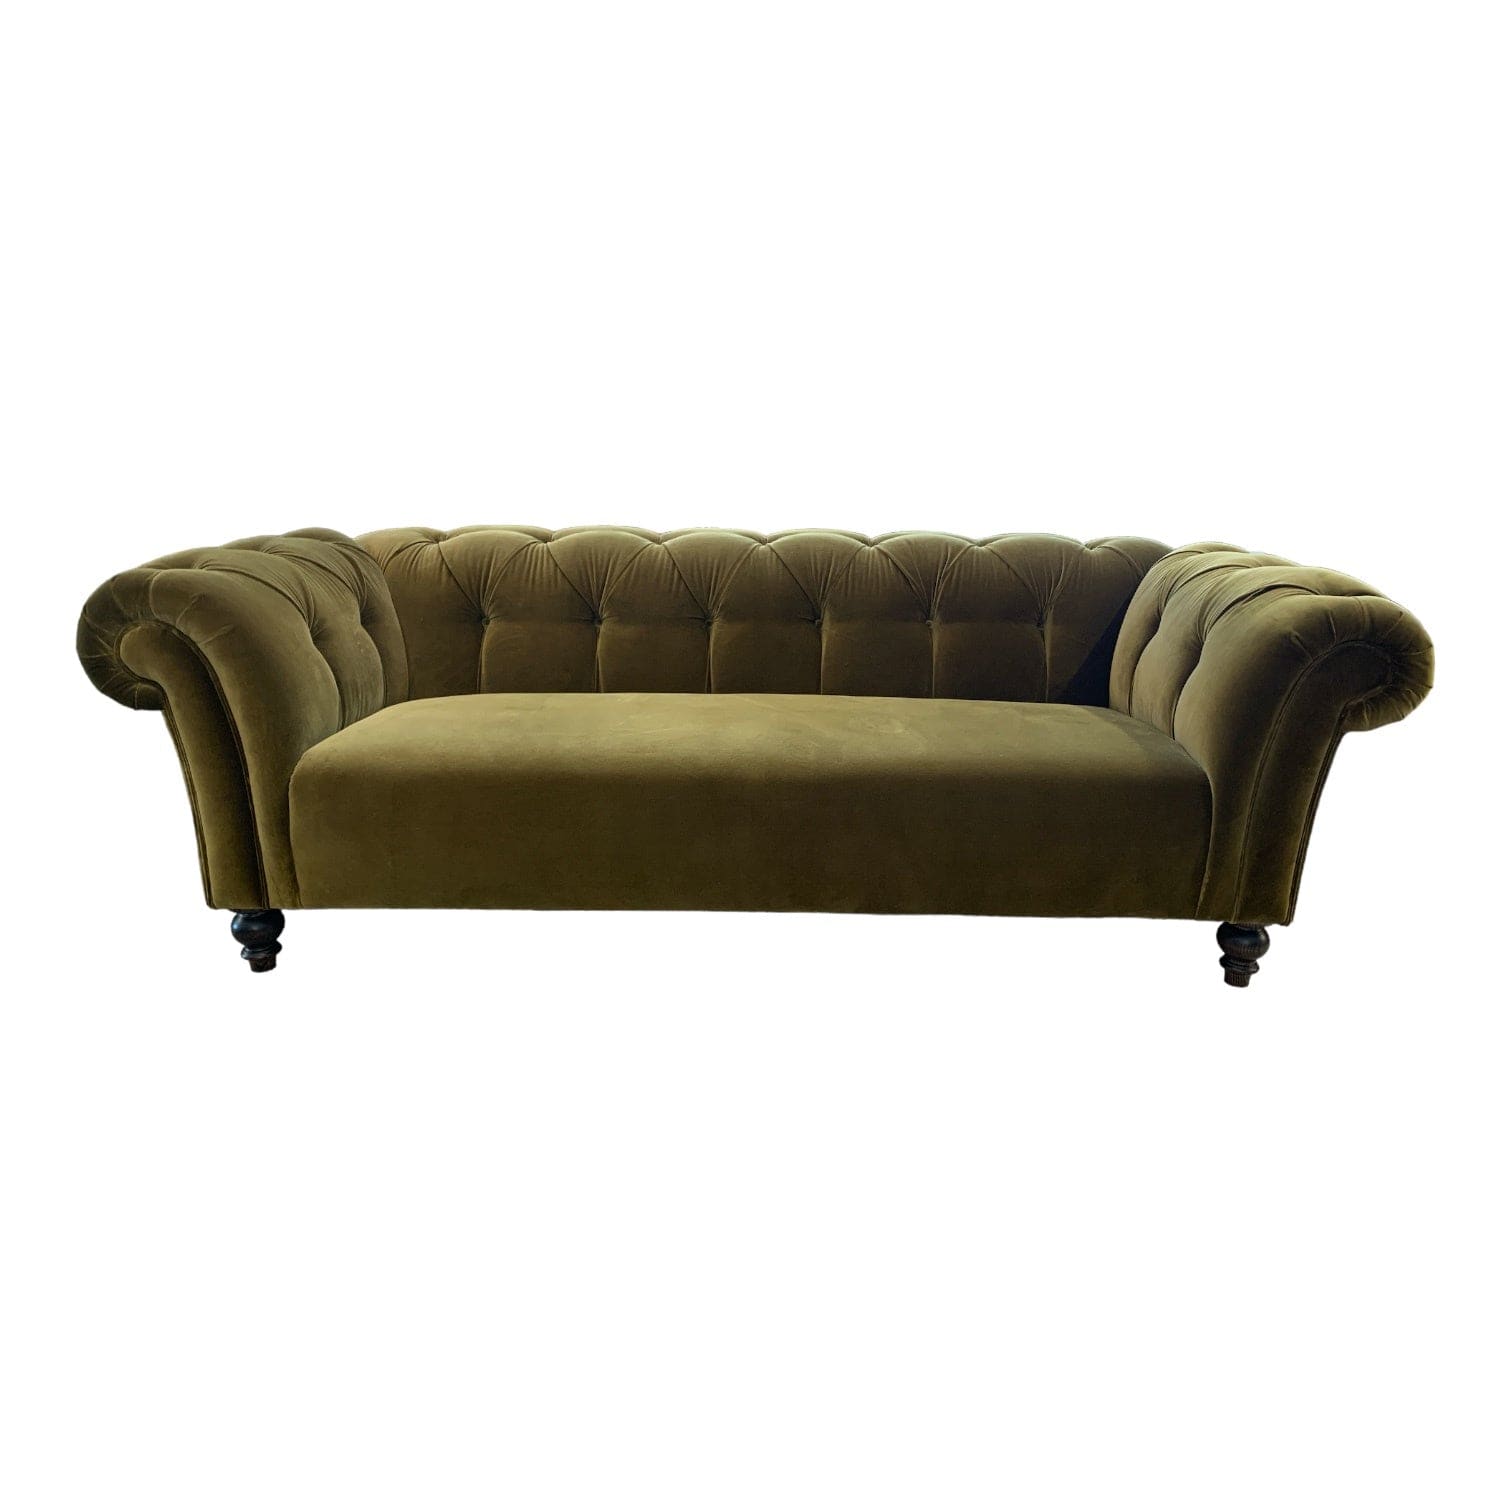 Arthur Olive 3 Seater Chesterfield Sofa